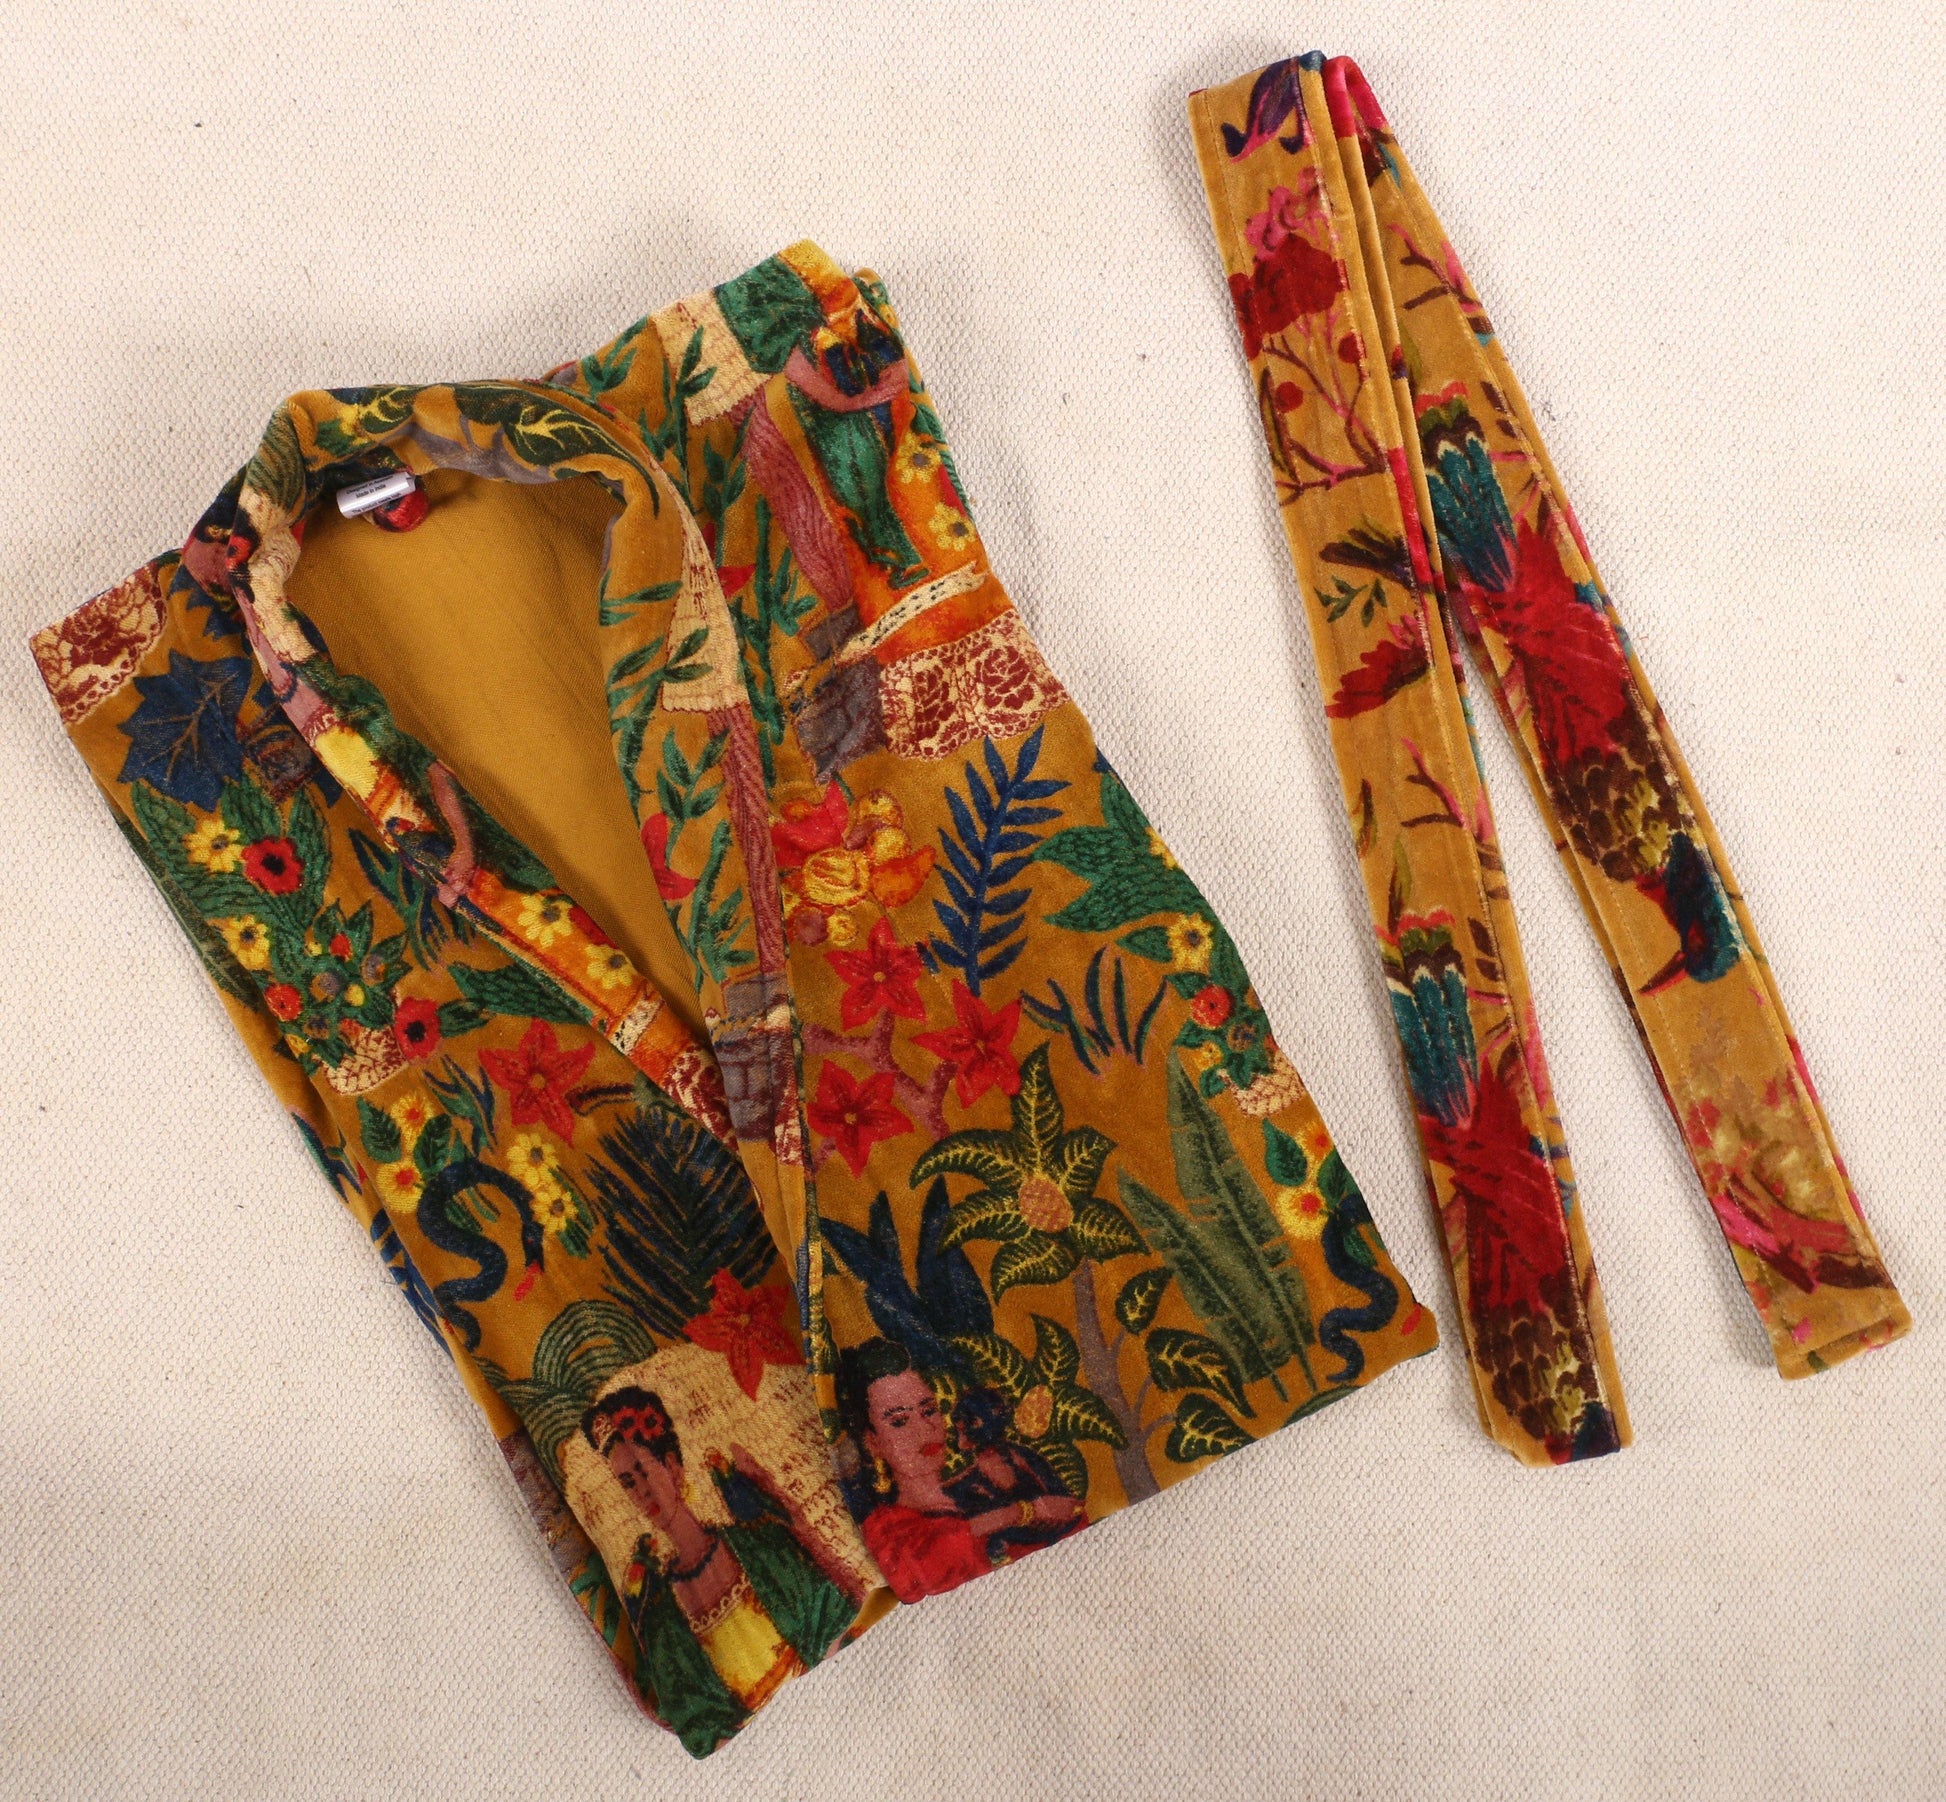 Short Velvet Kimono/ Jacket Frida Kahlo print -yellow - The Teal Thread